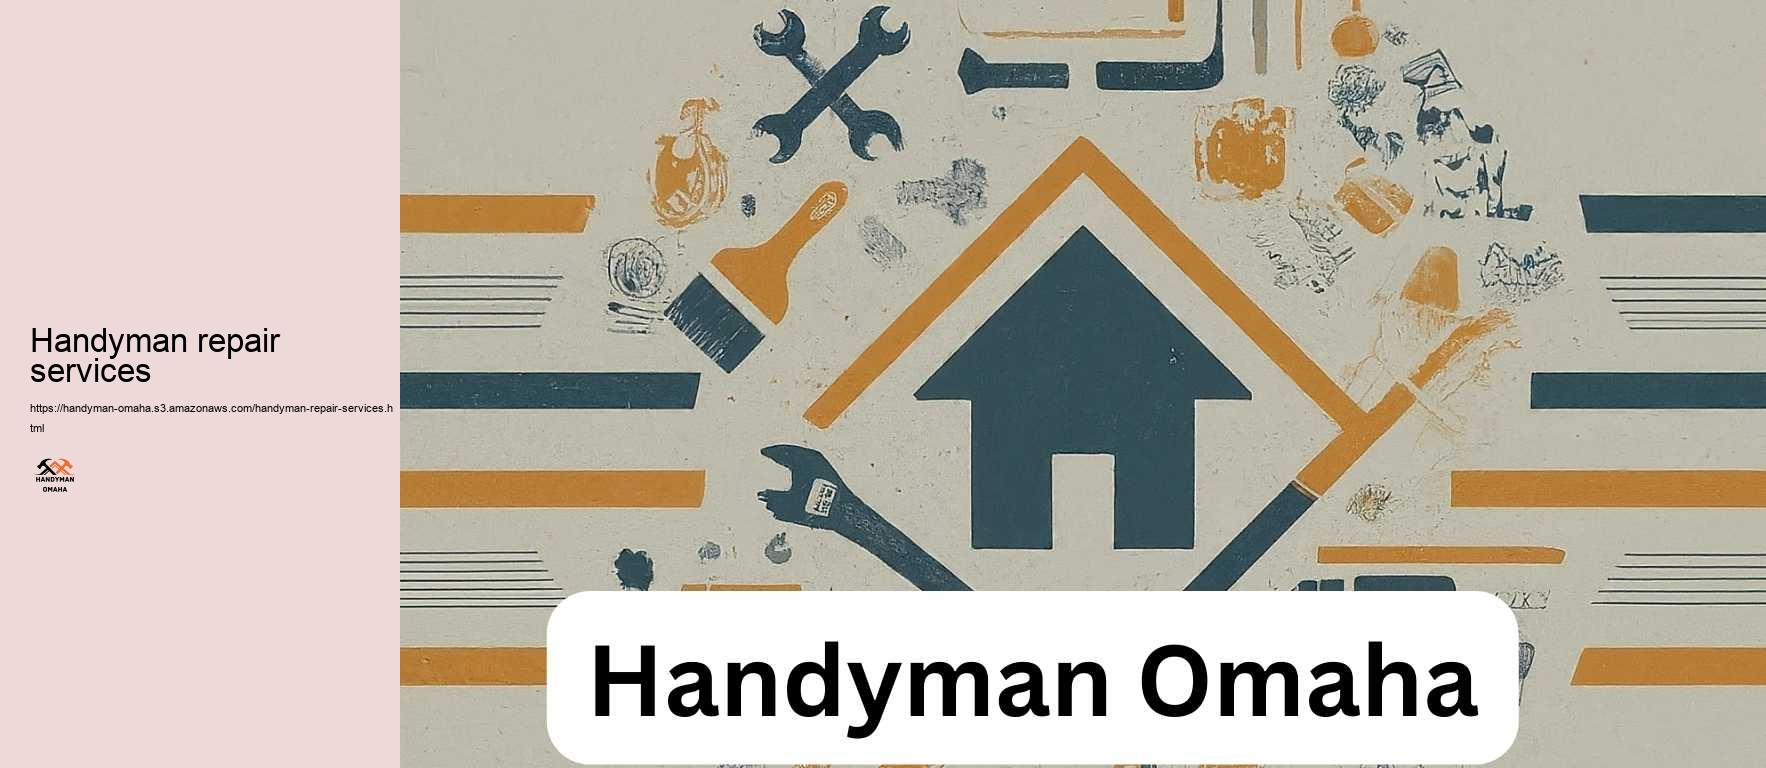 Handyman repair services